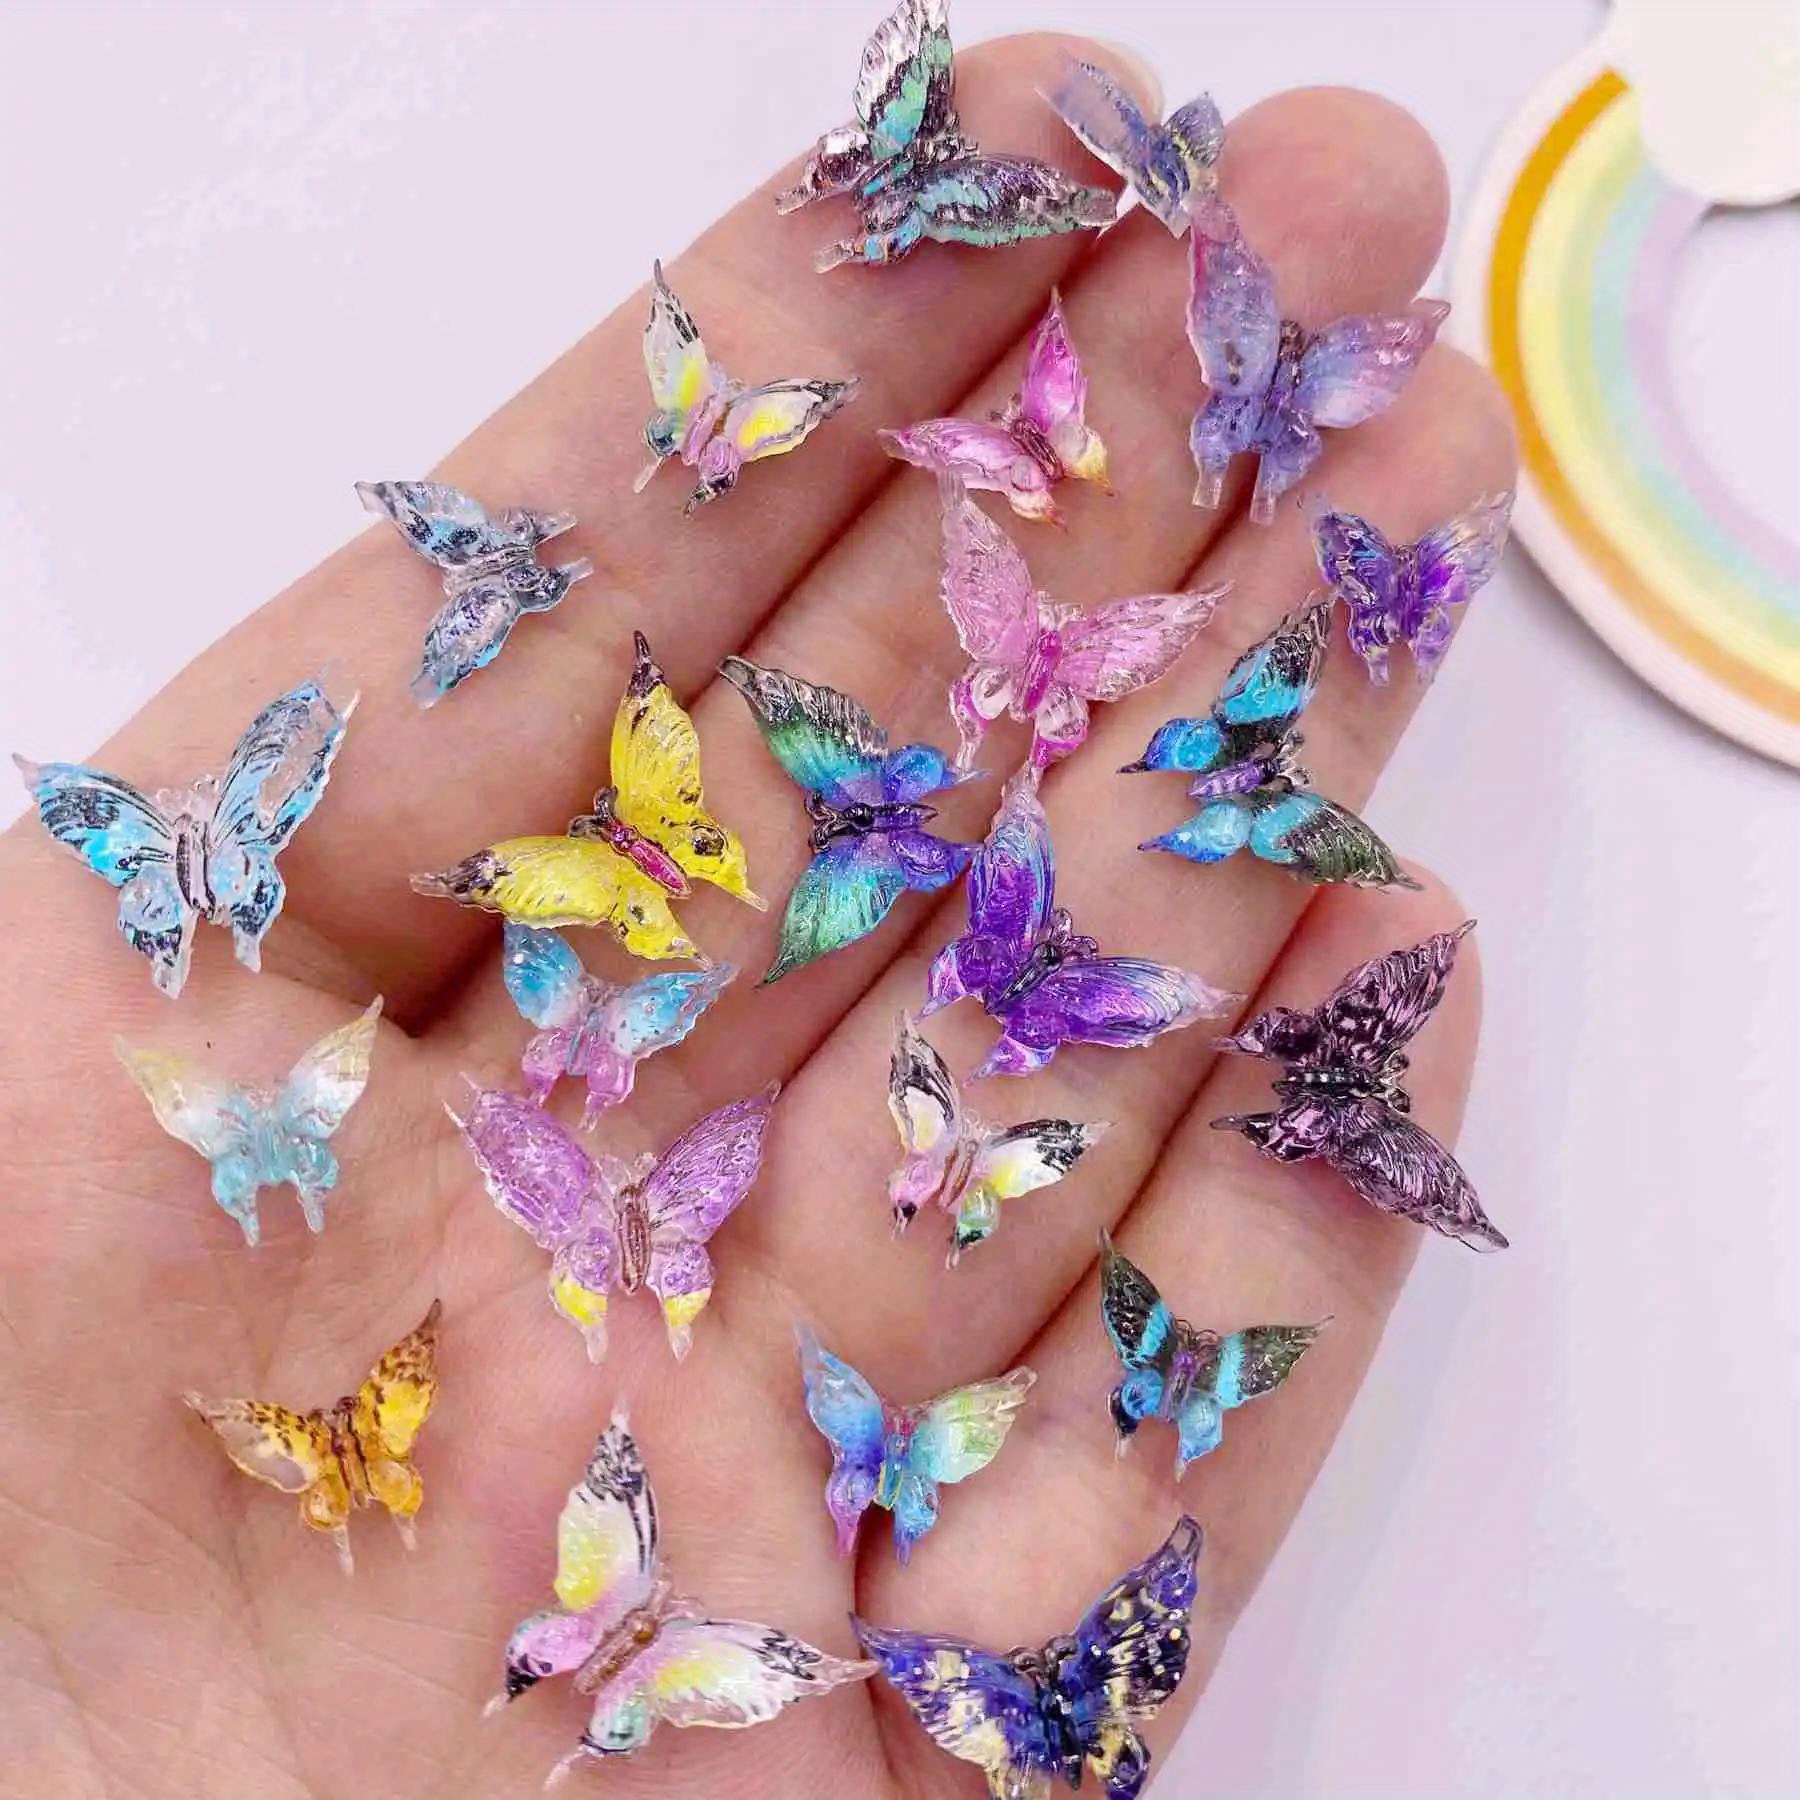 

20pcs Mixed Resin Colorful Mini Cute Glitter Crystal Butterfly Nail Art Flat Back Rhinestone Applique Decor Diy Wedding Scrapbook Accessories Crafts